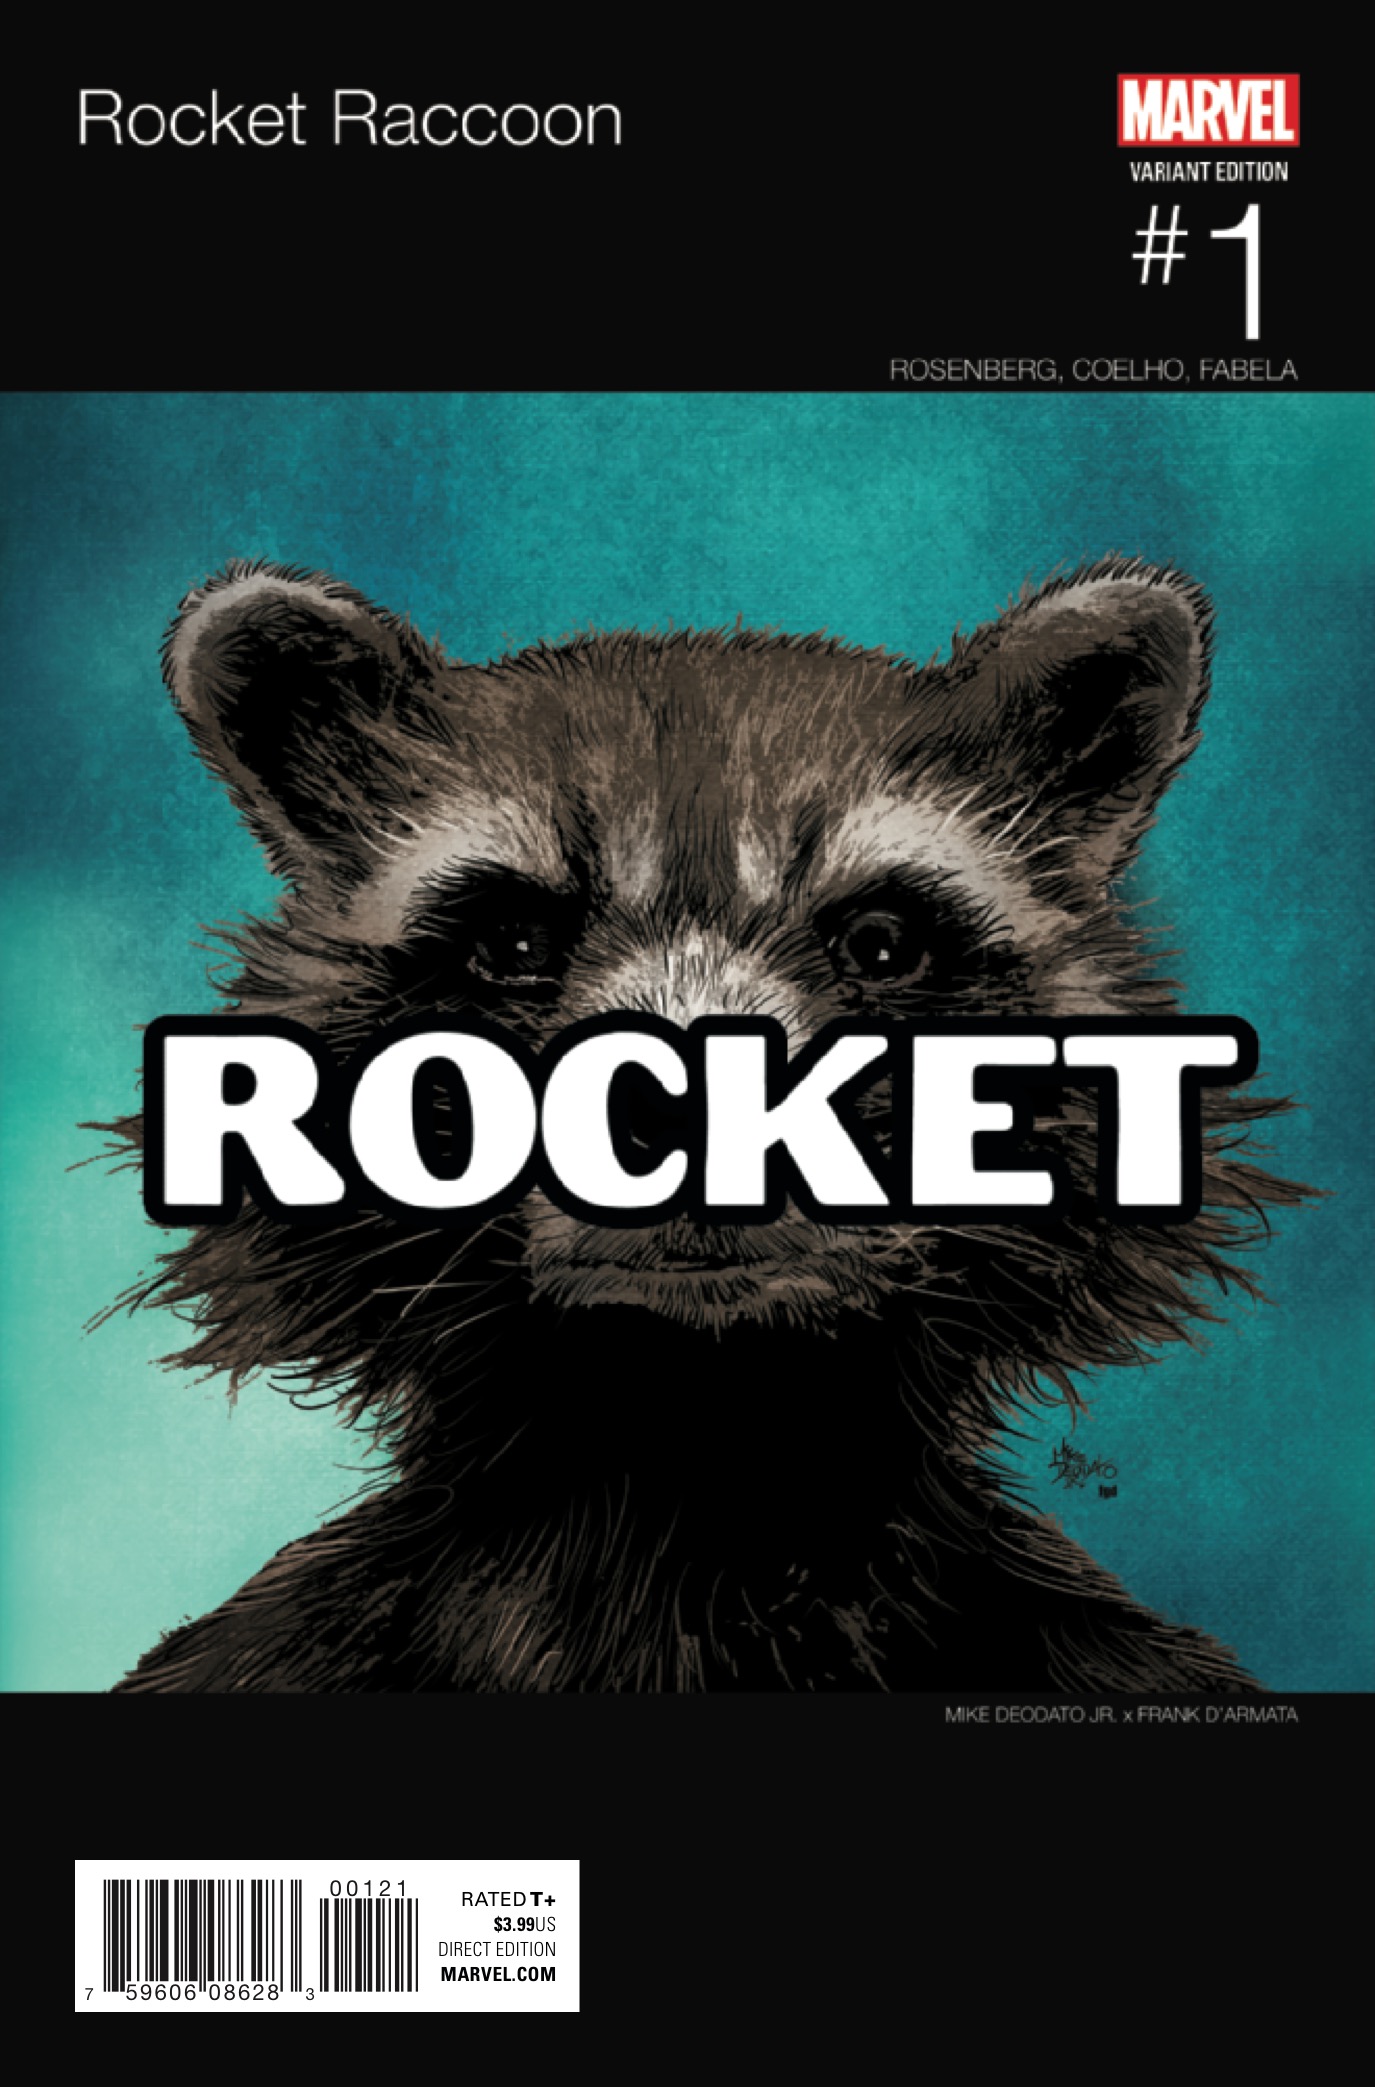 Rocket Raccoon #1 Review